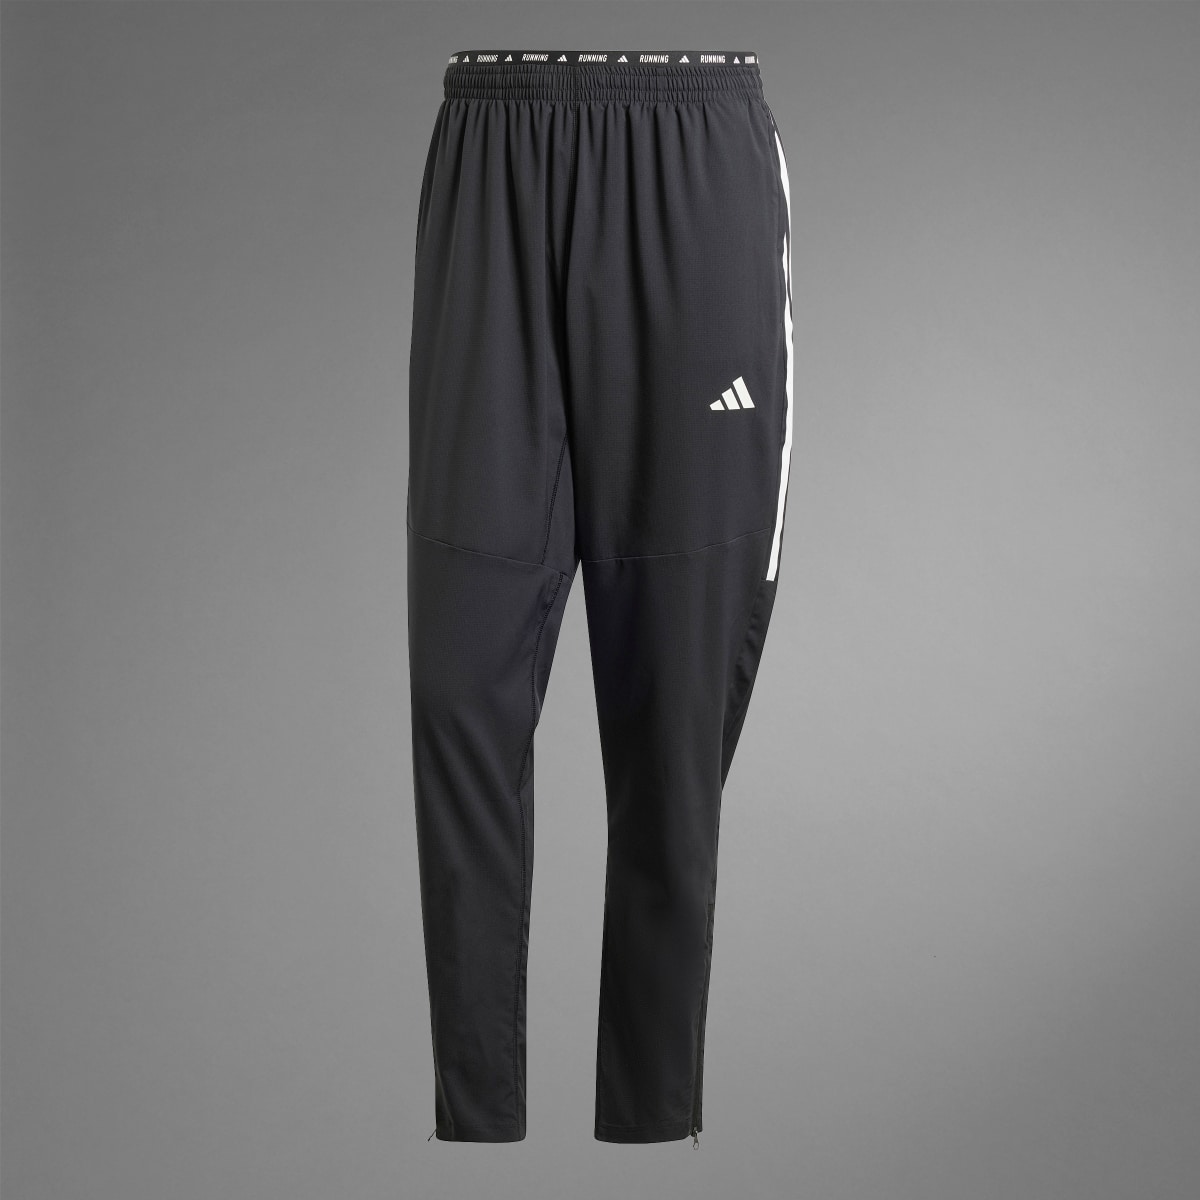 Adidas Own the Run 3-Stripes Pants. 9